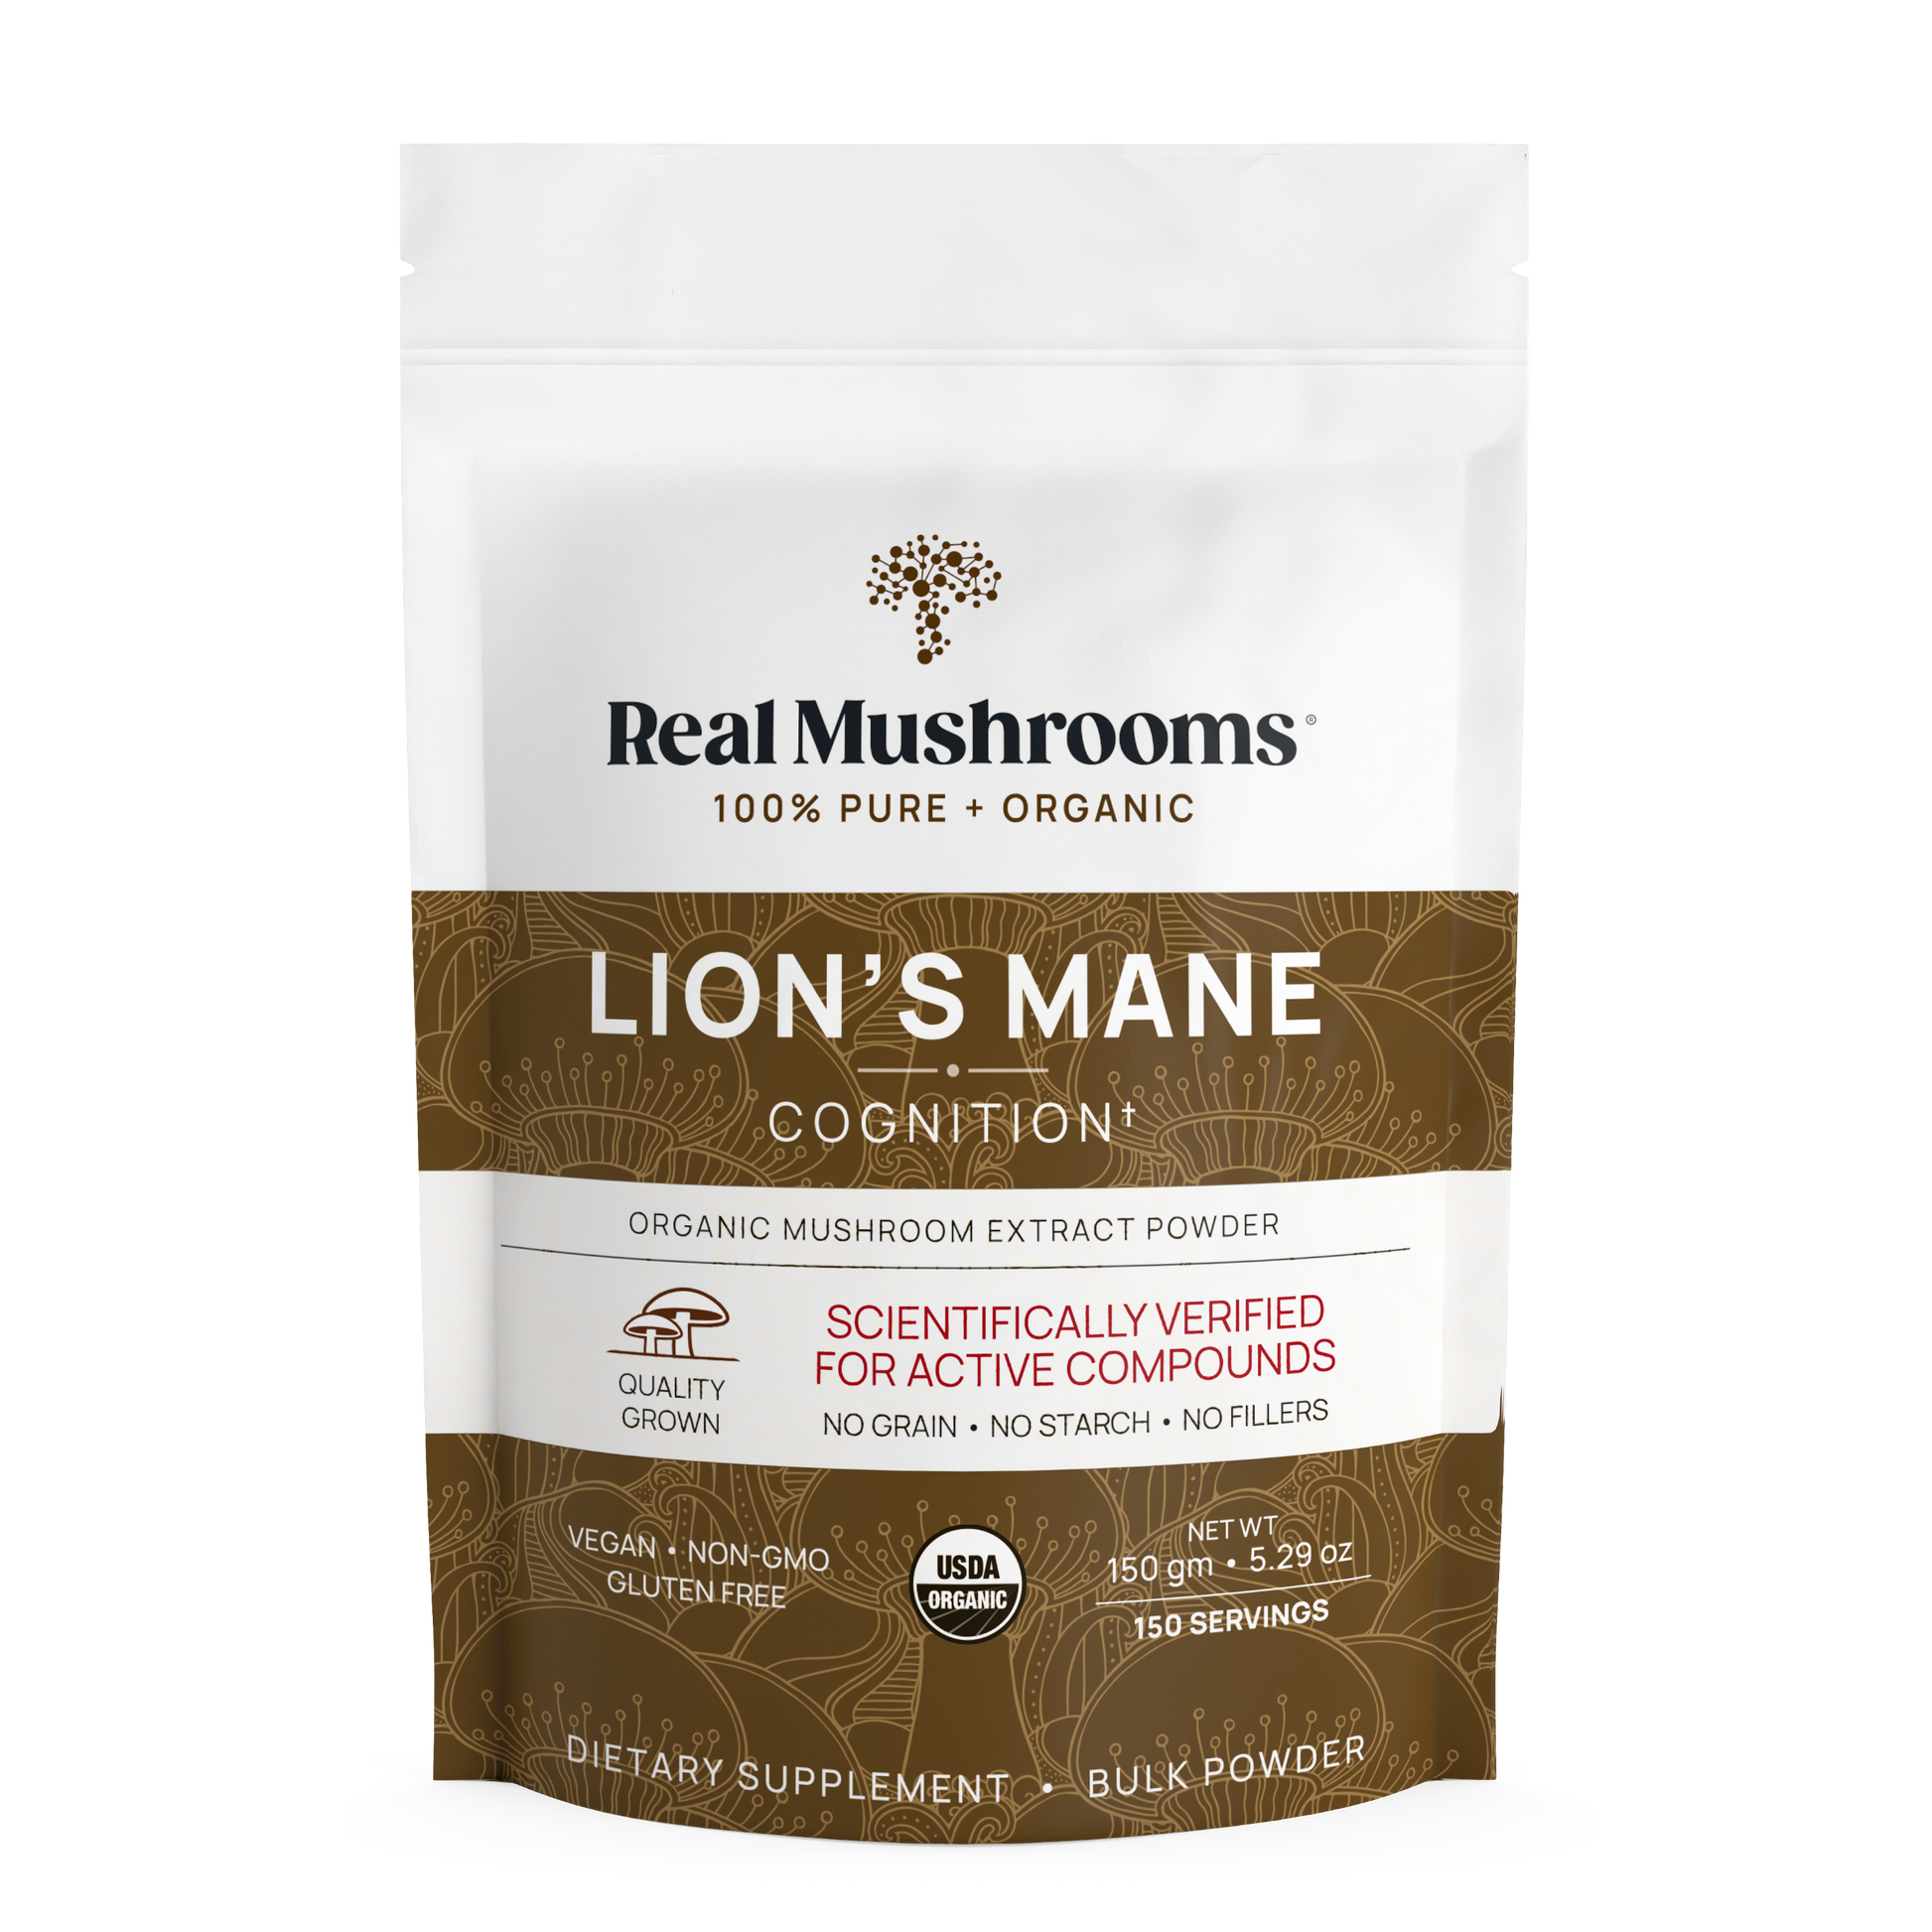 Real Mushrooms Organic Lion's Mane Mushroom Powder – Bulk Extract conditions.